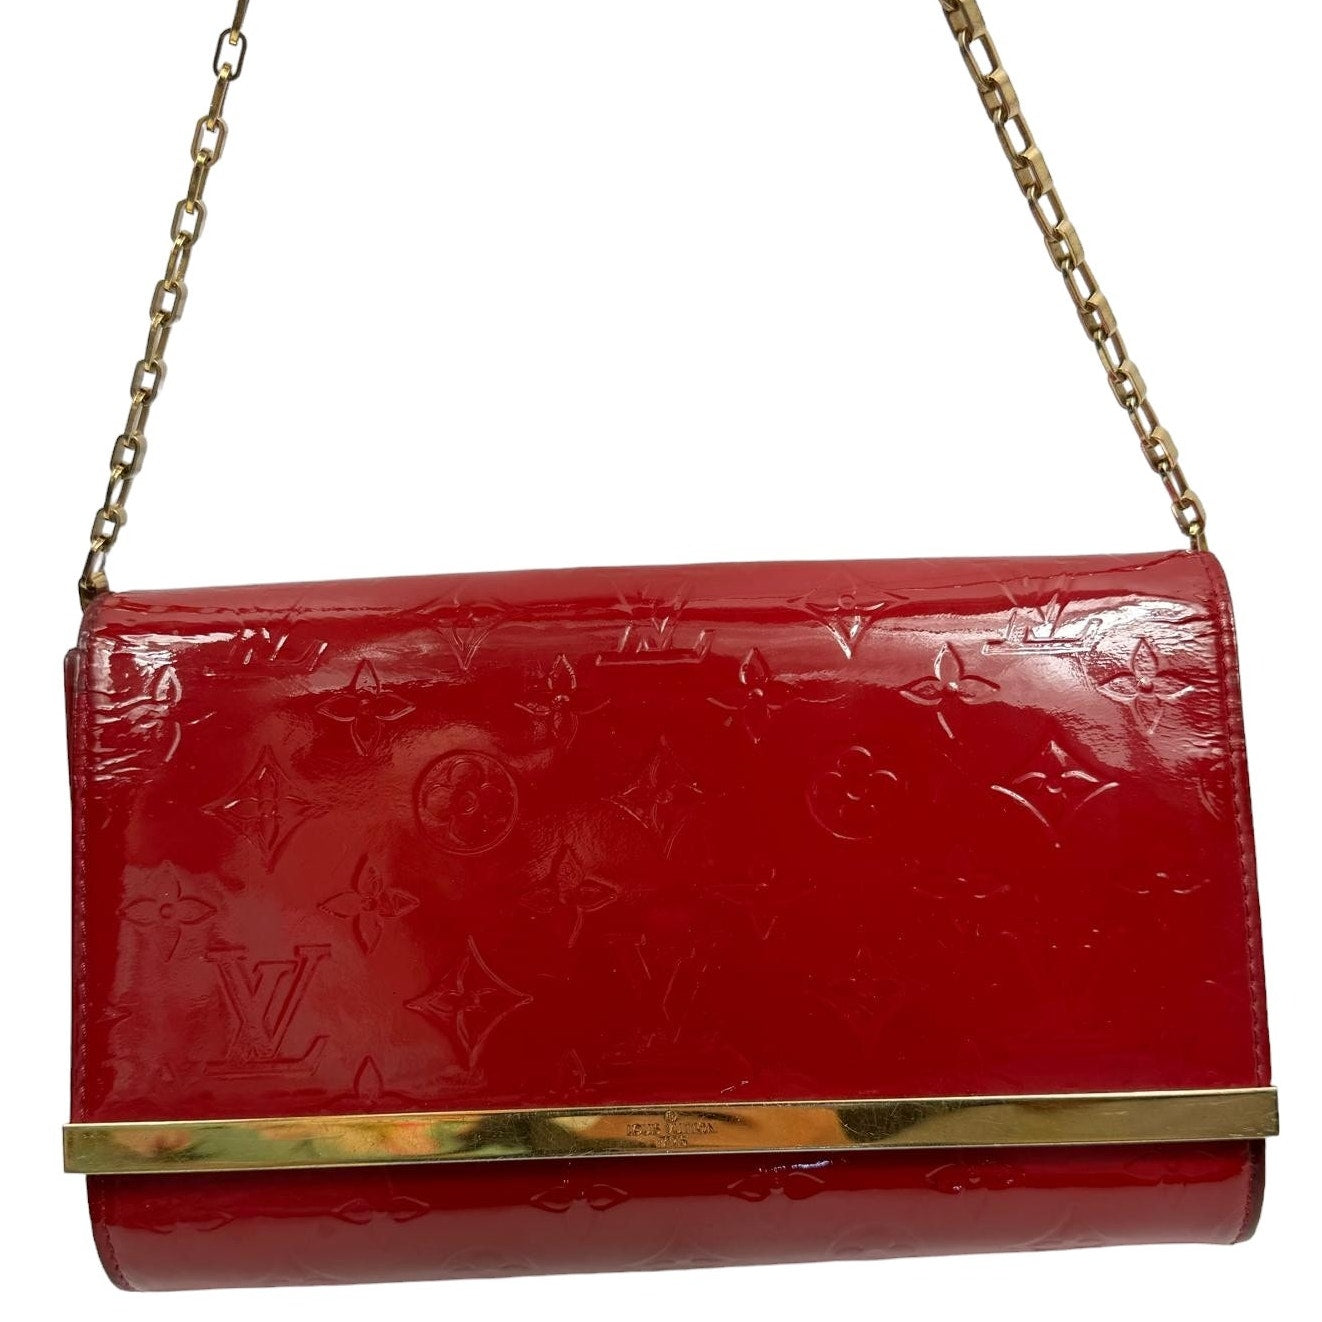 Authentic Louis Vuitton Vernis Clutch Ana Shoulder Bag Red